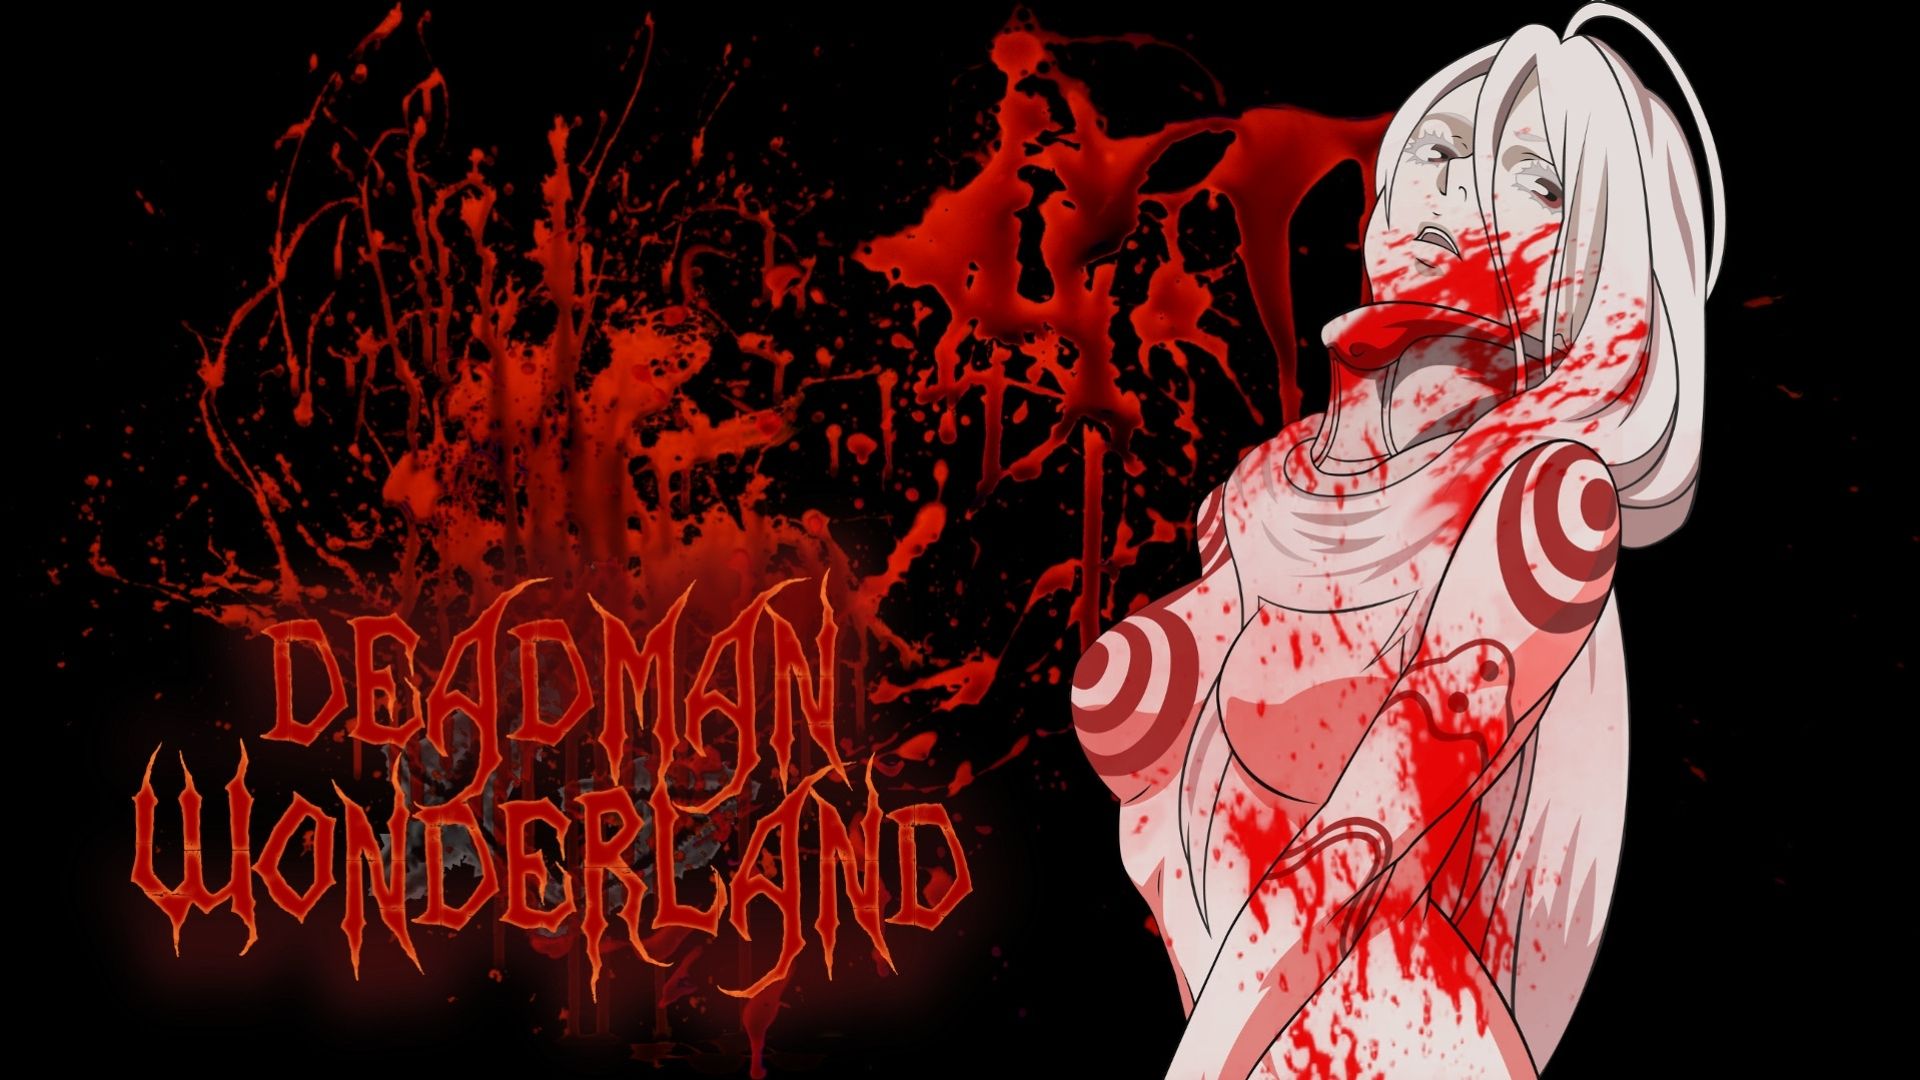 Free download Shiro deadman wonderland Anime Wallpaper 58725